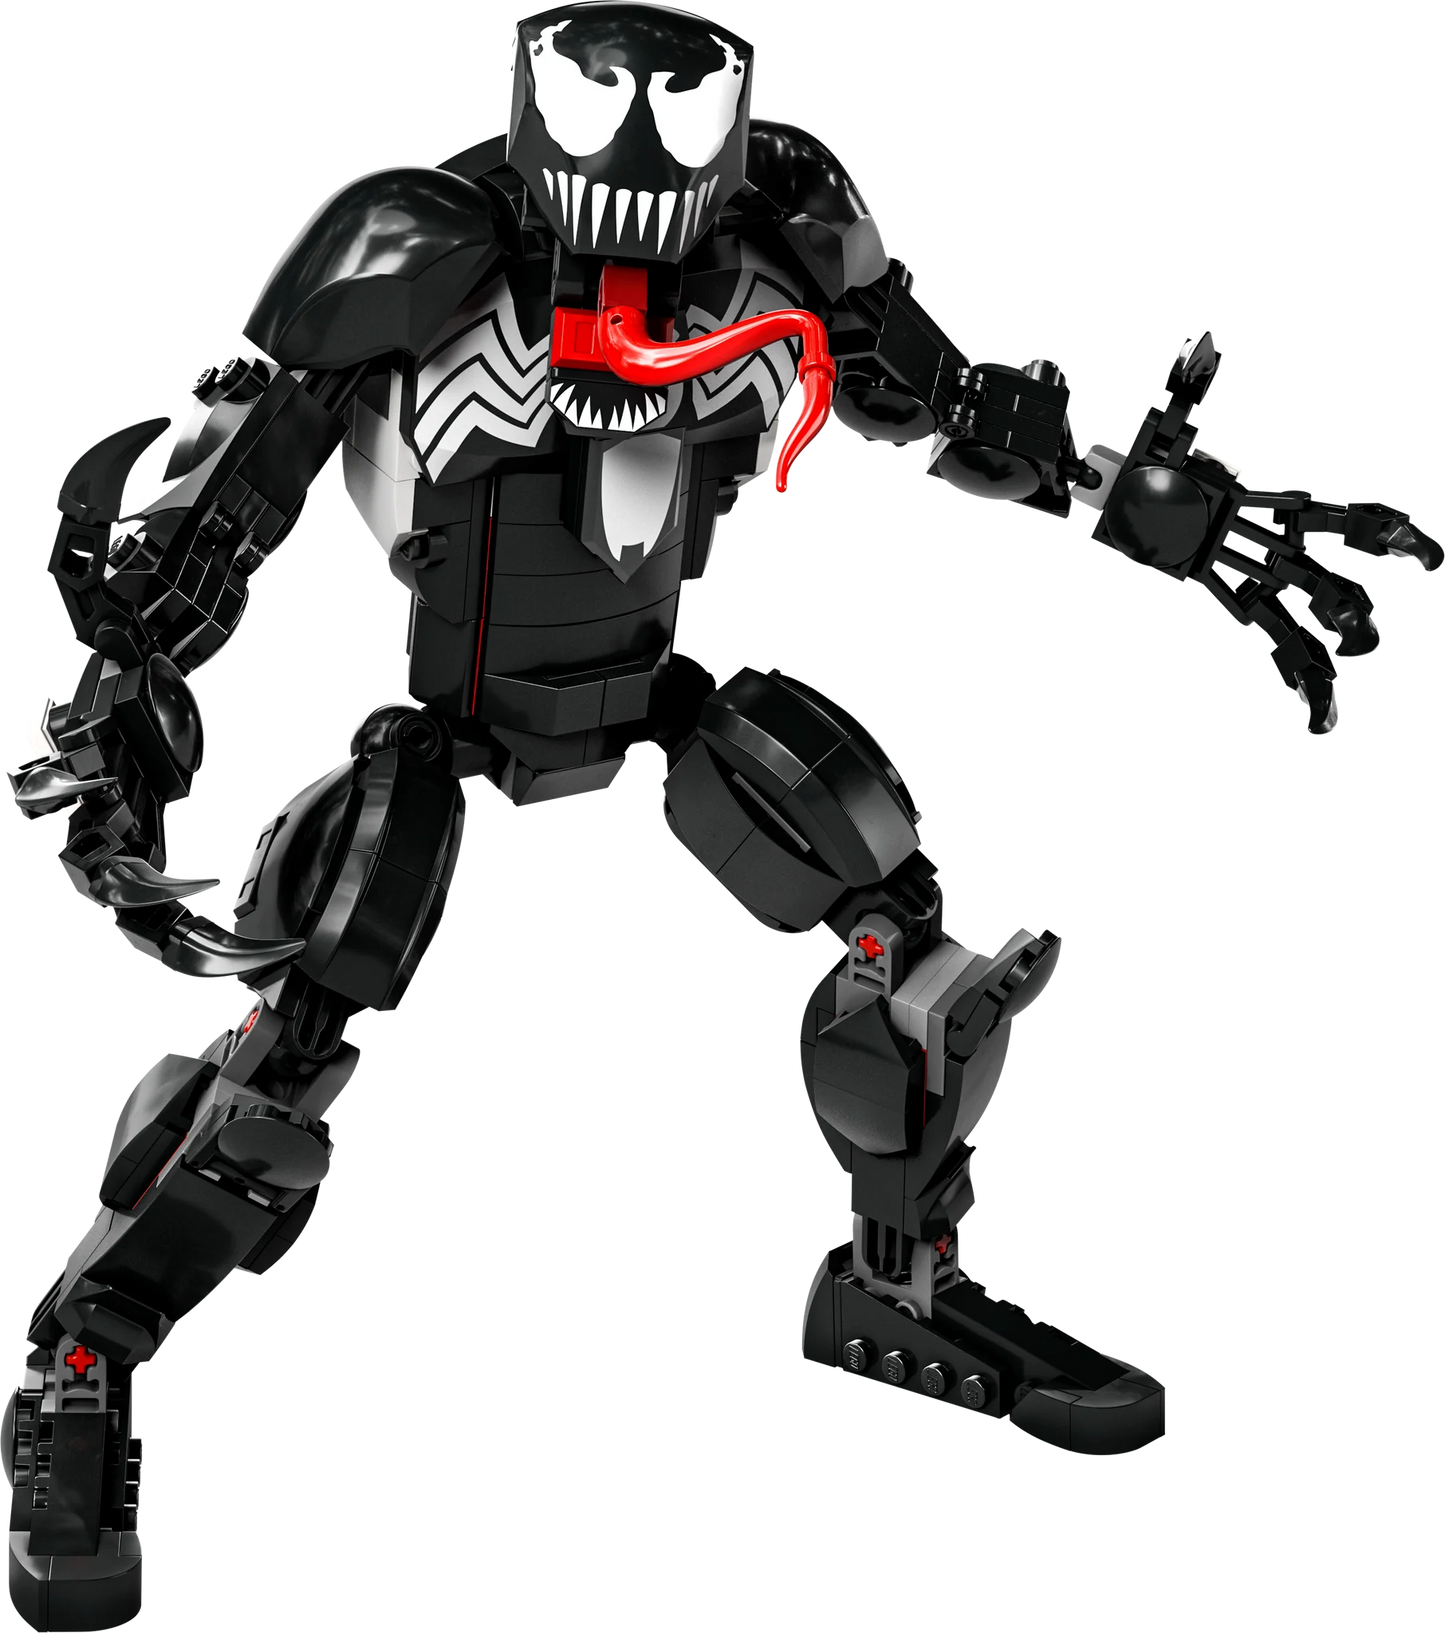 LEGO Marvel 76230 Venom Figure